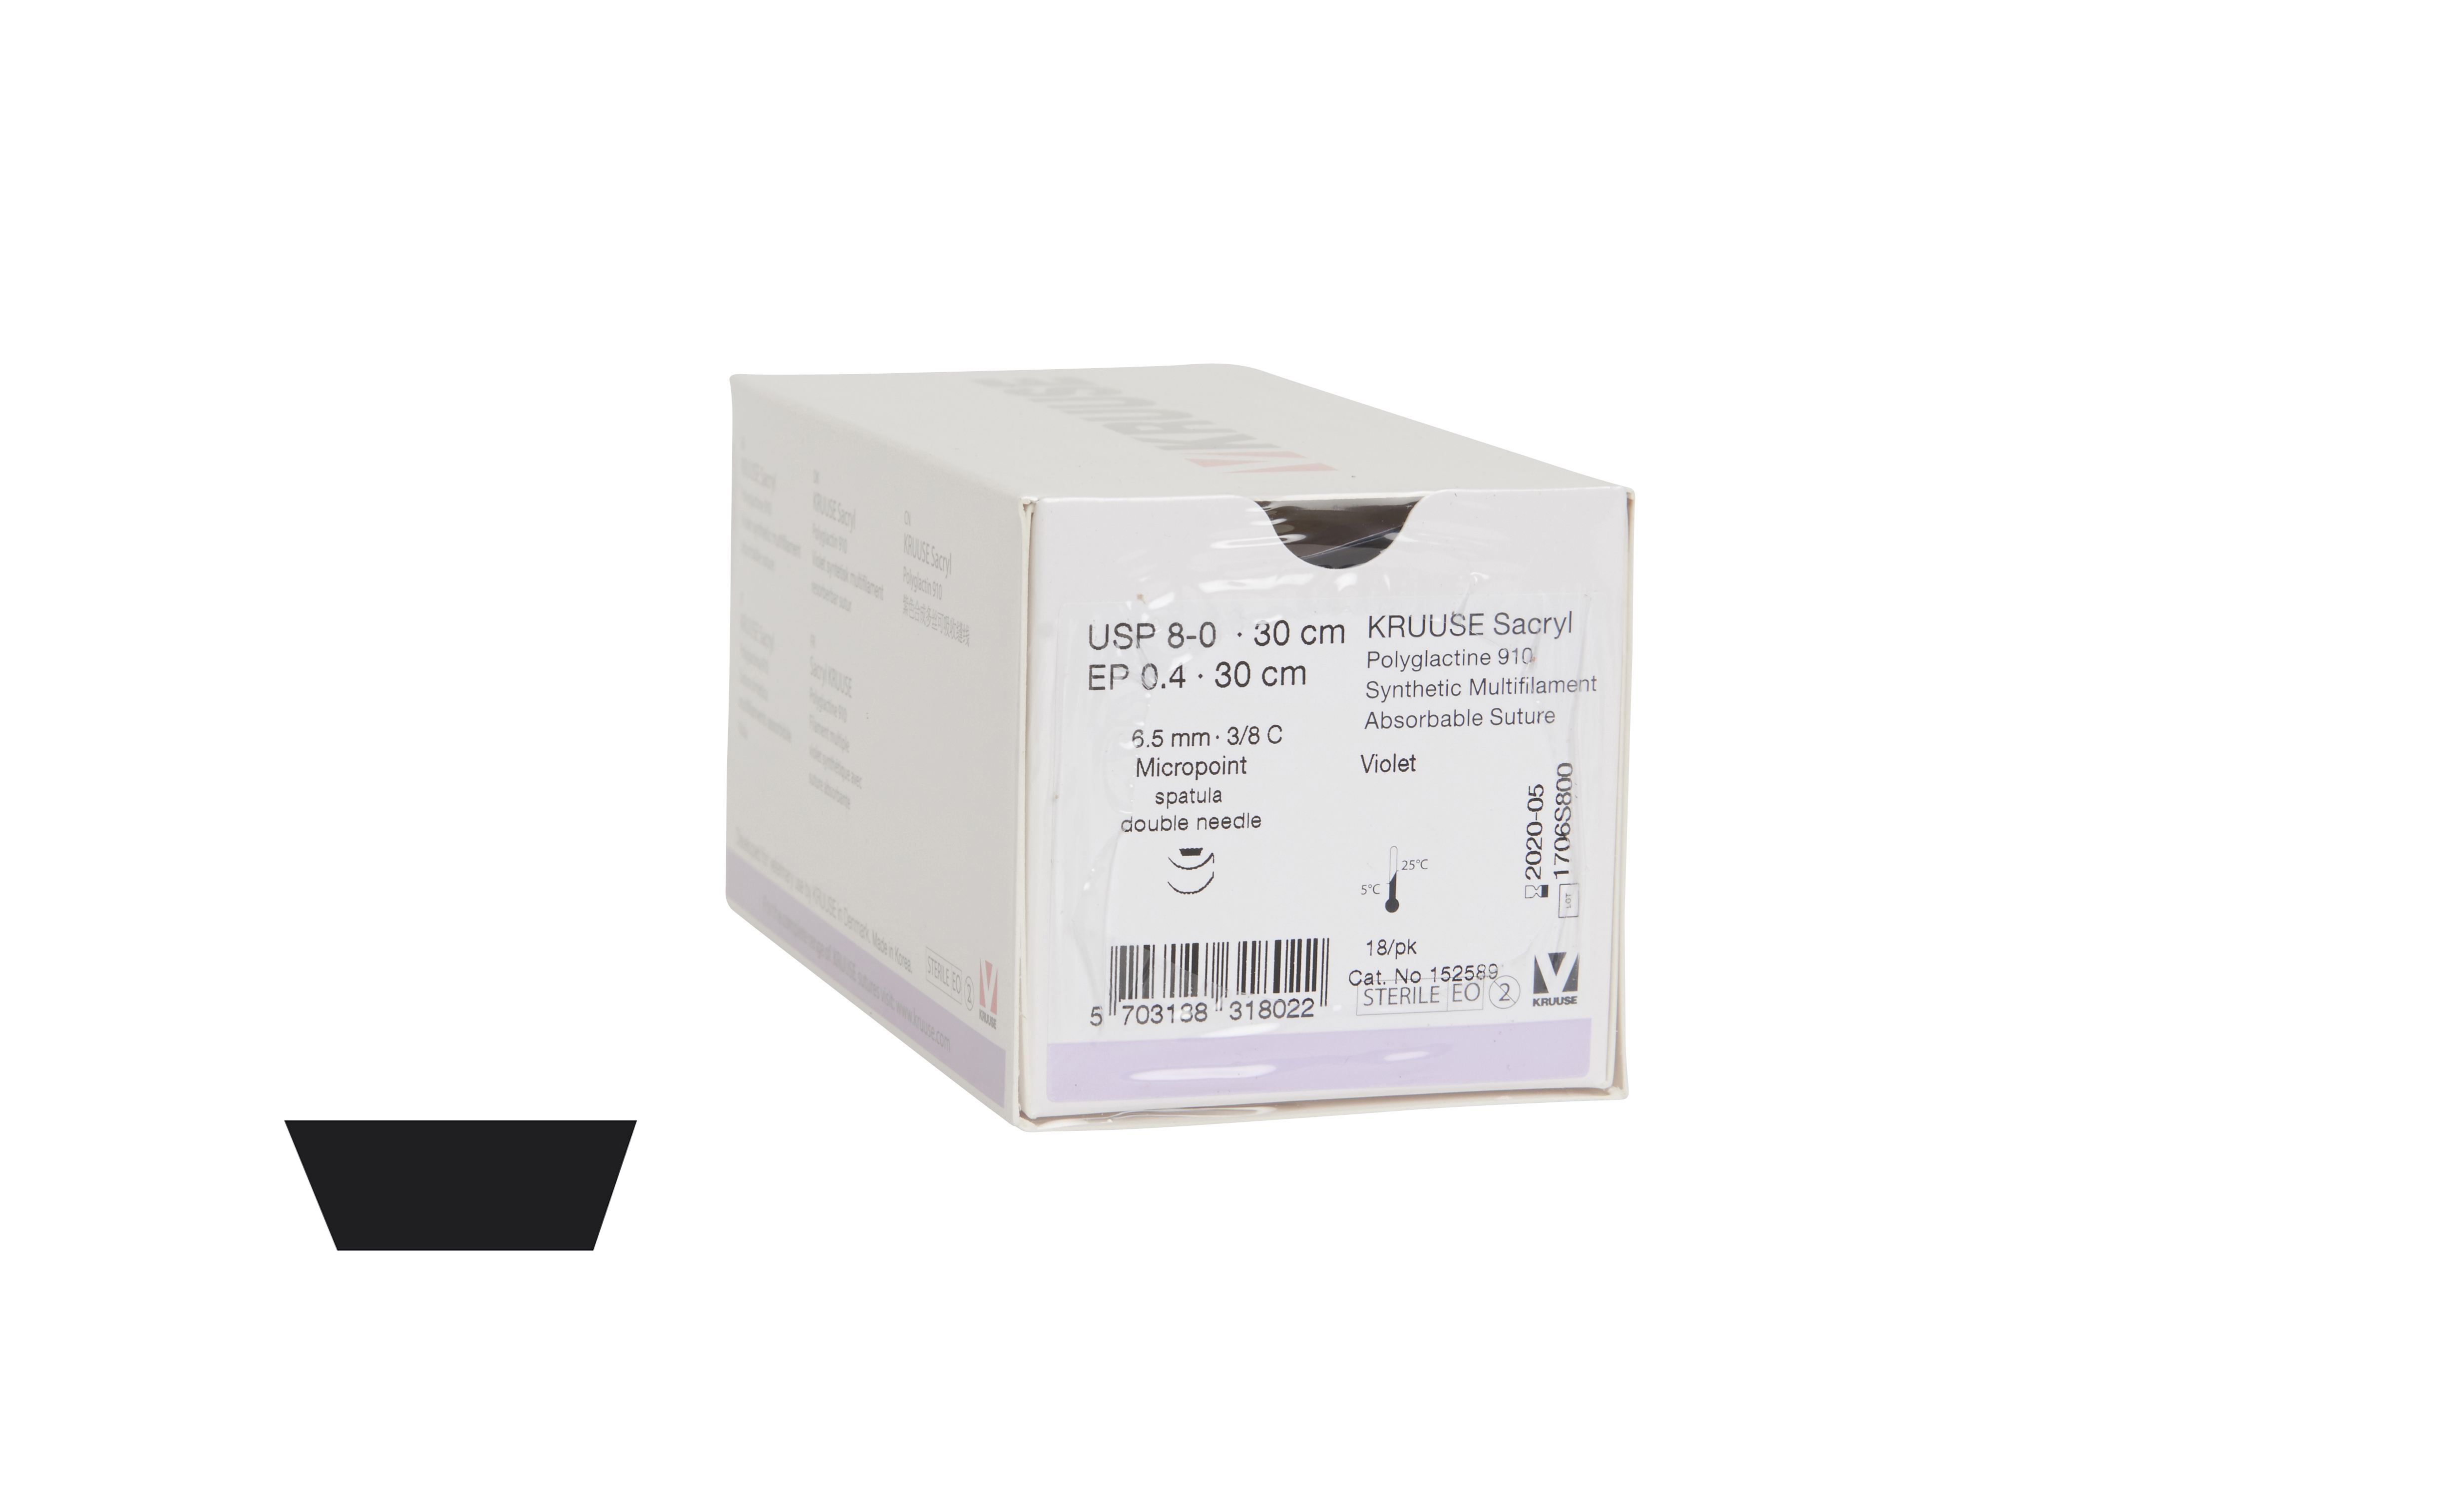 KRUUSE Sacryl Suture, USP 8-0/EP 0.4, 30 cm, violet, 6.5 mm, 3/8 C, micropoint spatula (double needle), 18/pk